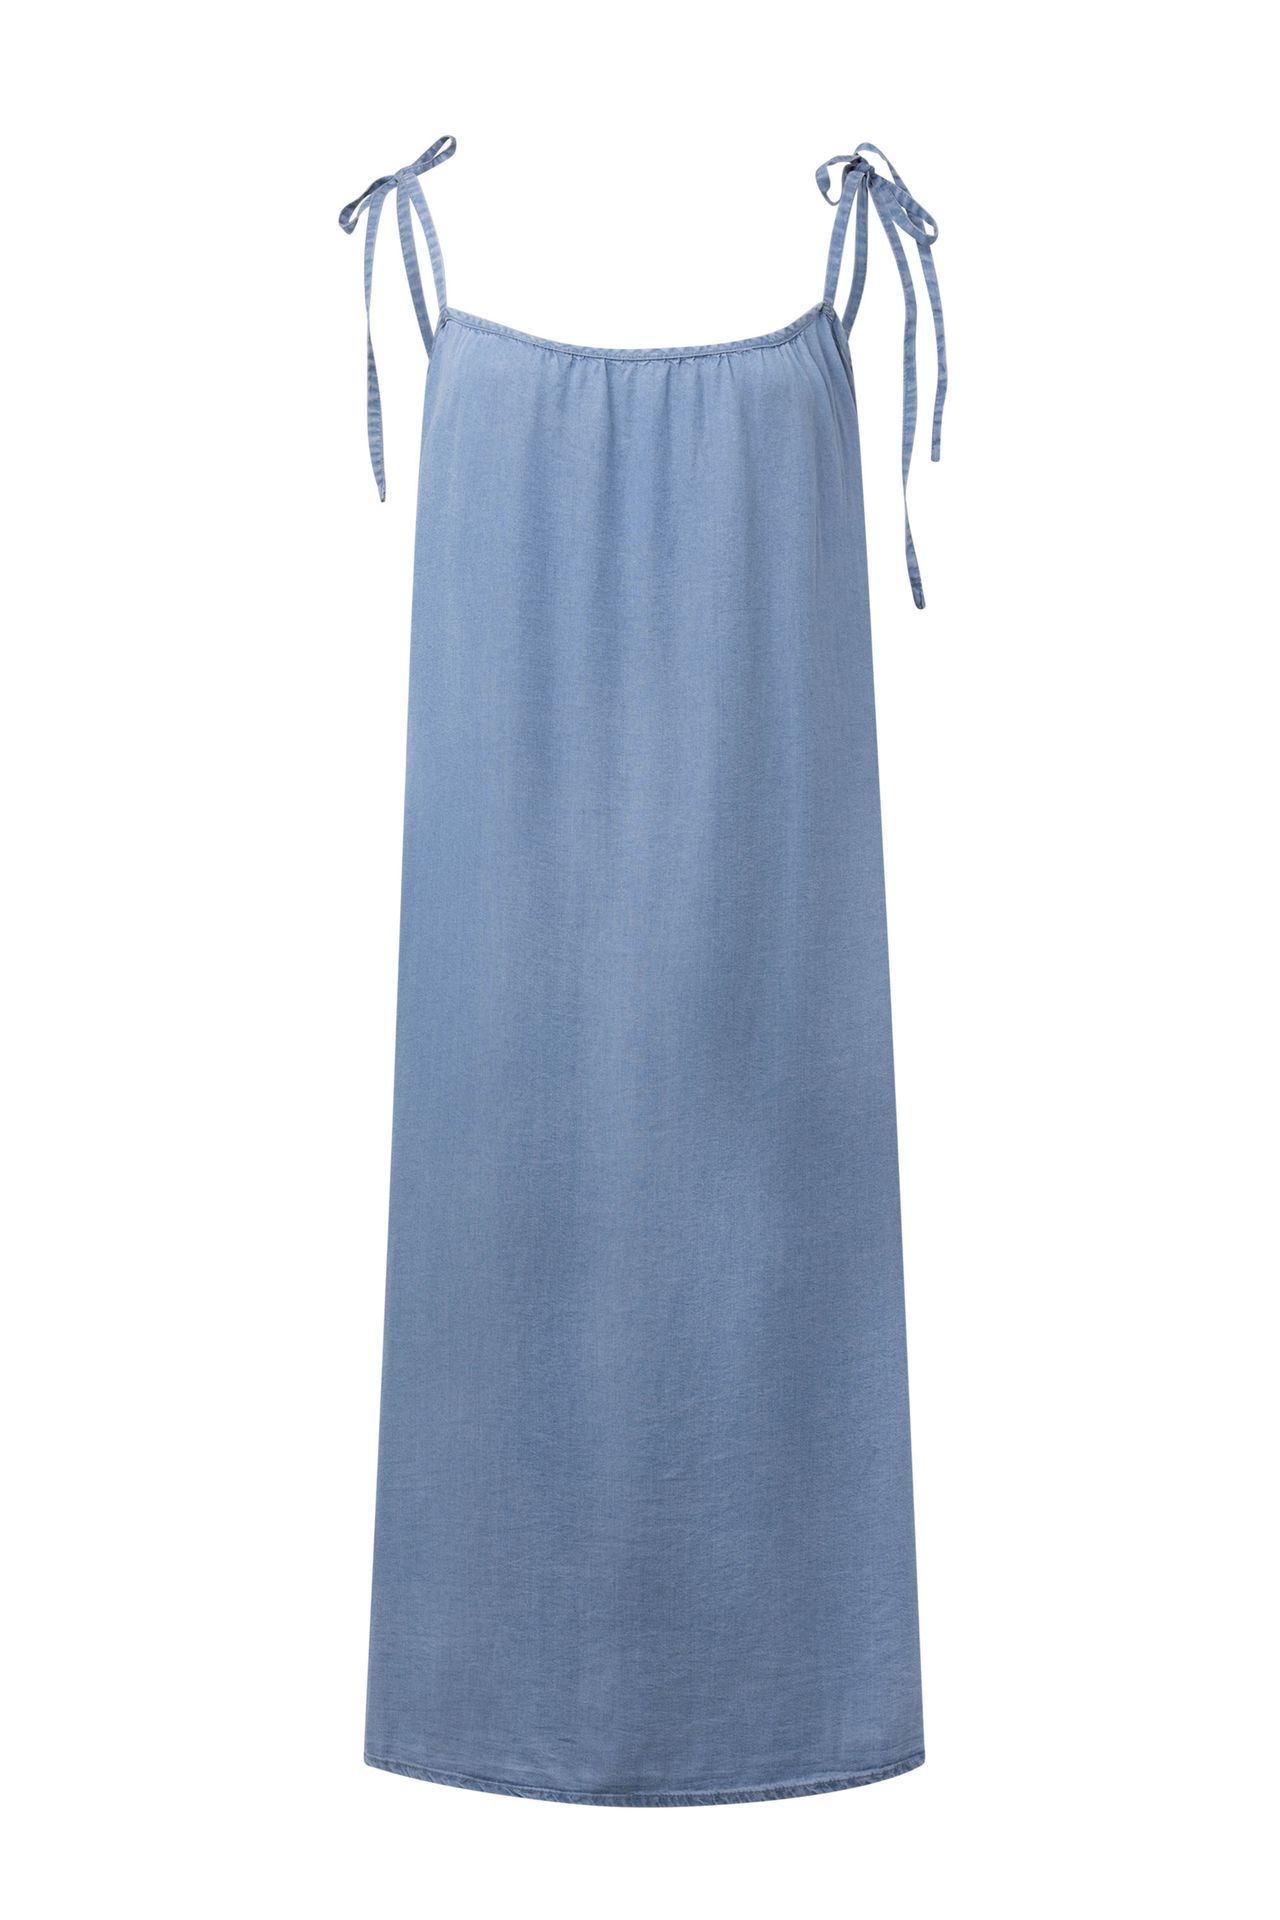 Norah Mini jurk meerkleurig jeans/blue 214717-471